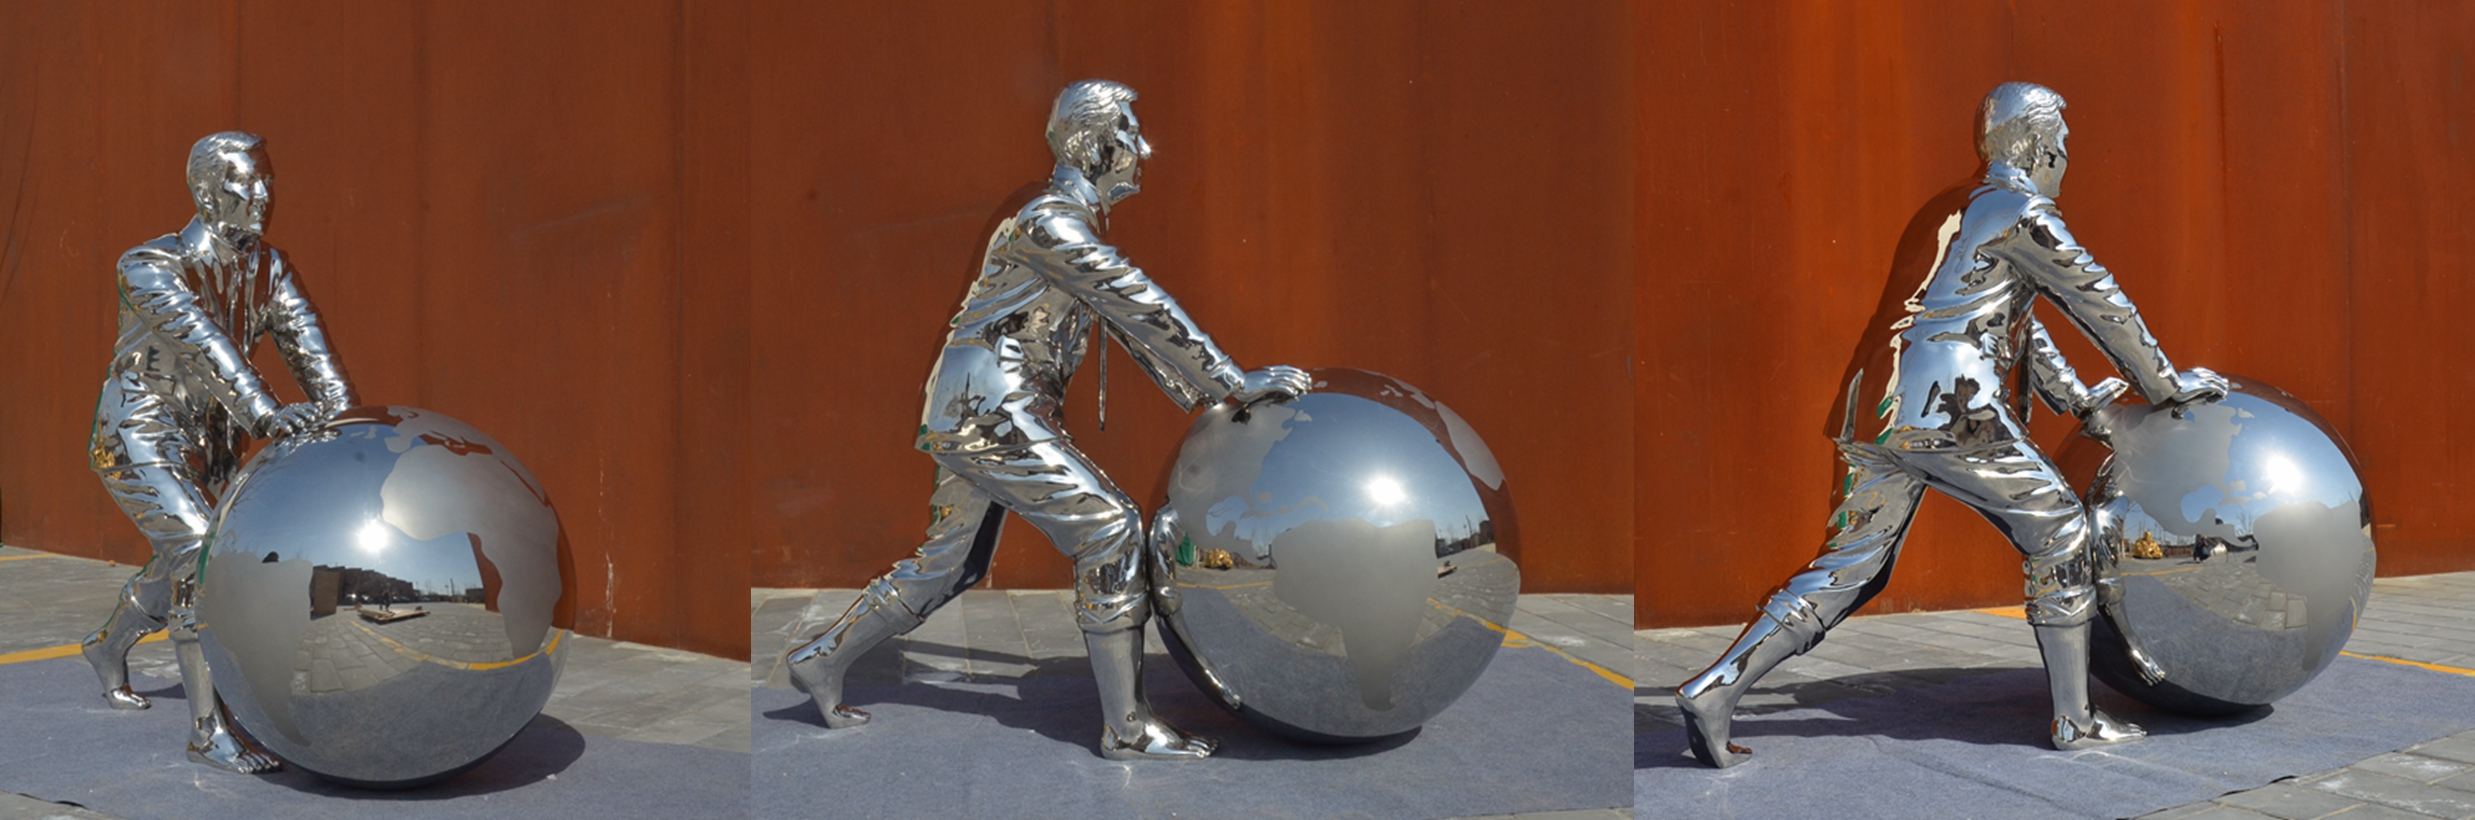 mirror polish stainless steel statue of Figure & Globe.jpg